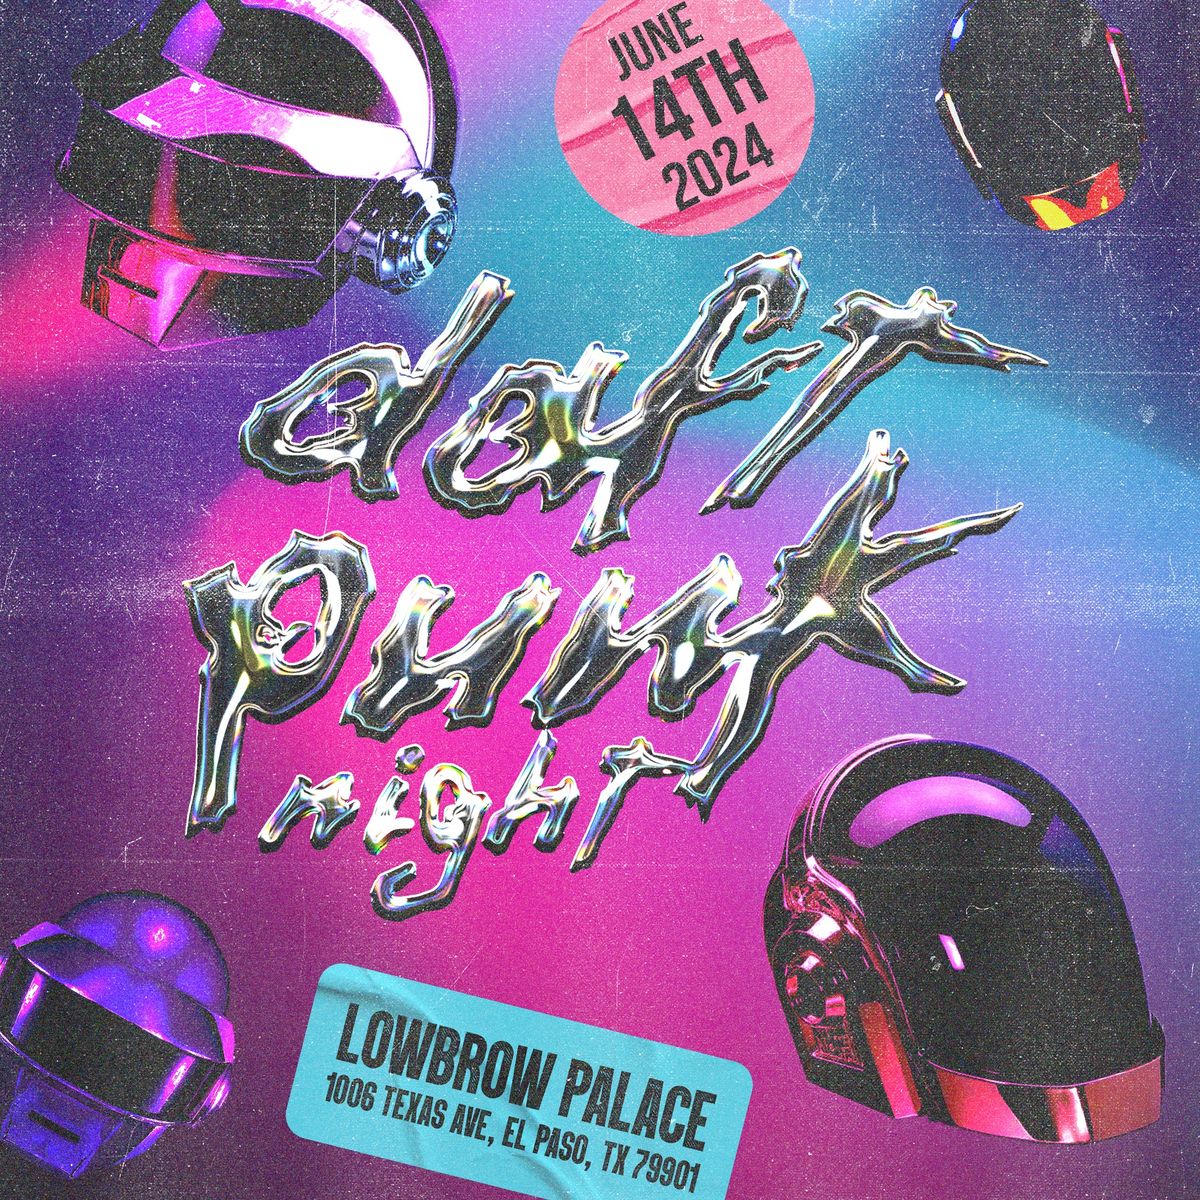 Daft Punk Night - Lowbrow Palace